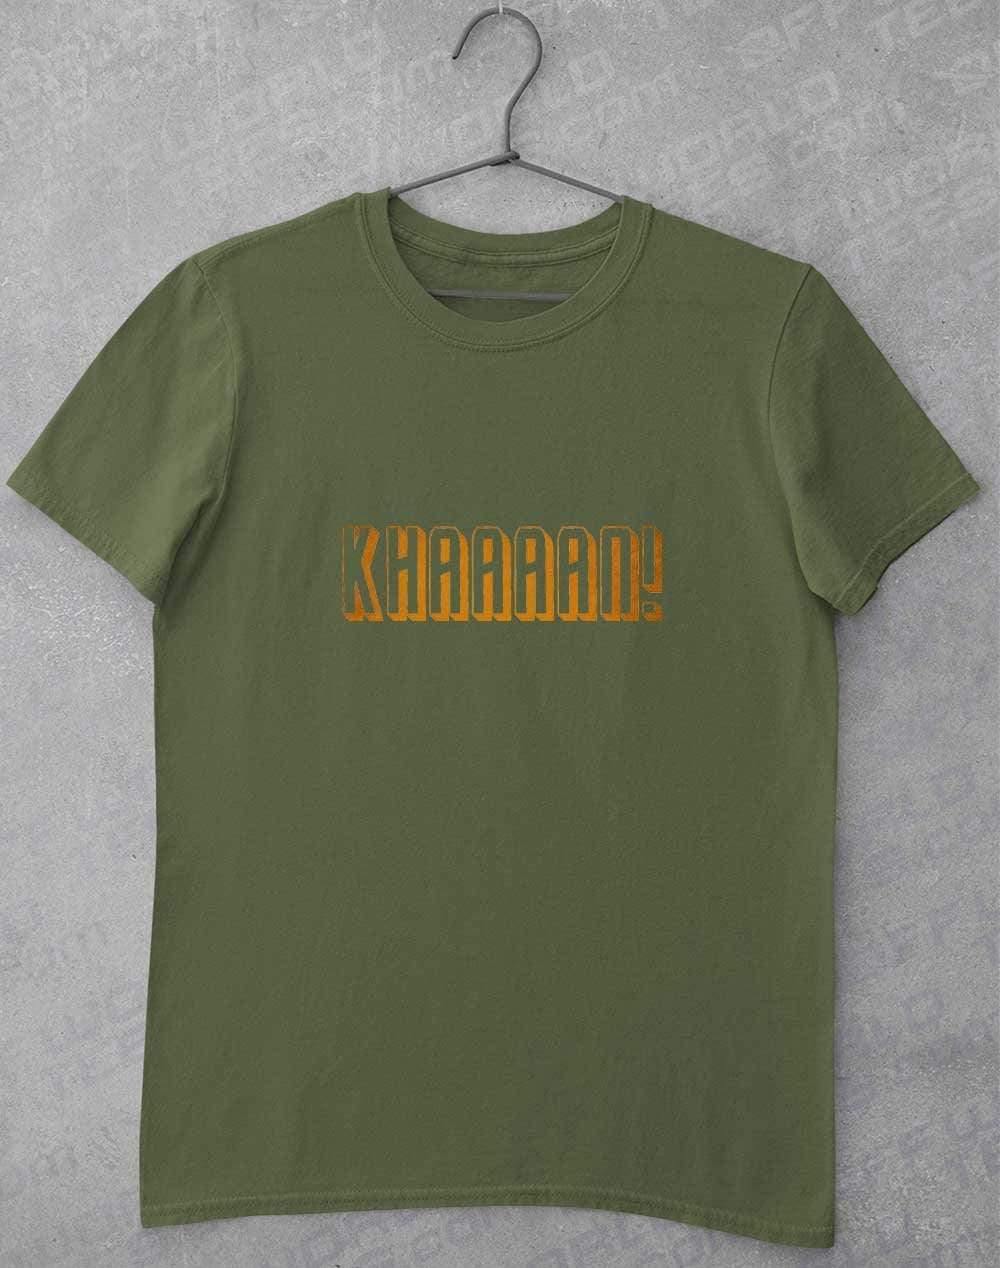 KHAAAAAN T-Shirt S / Military Green  - Off World Tees